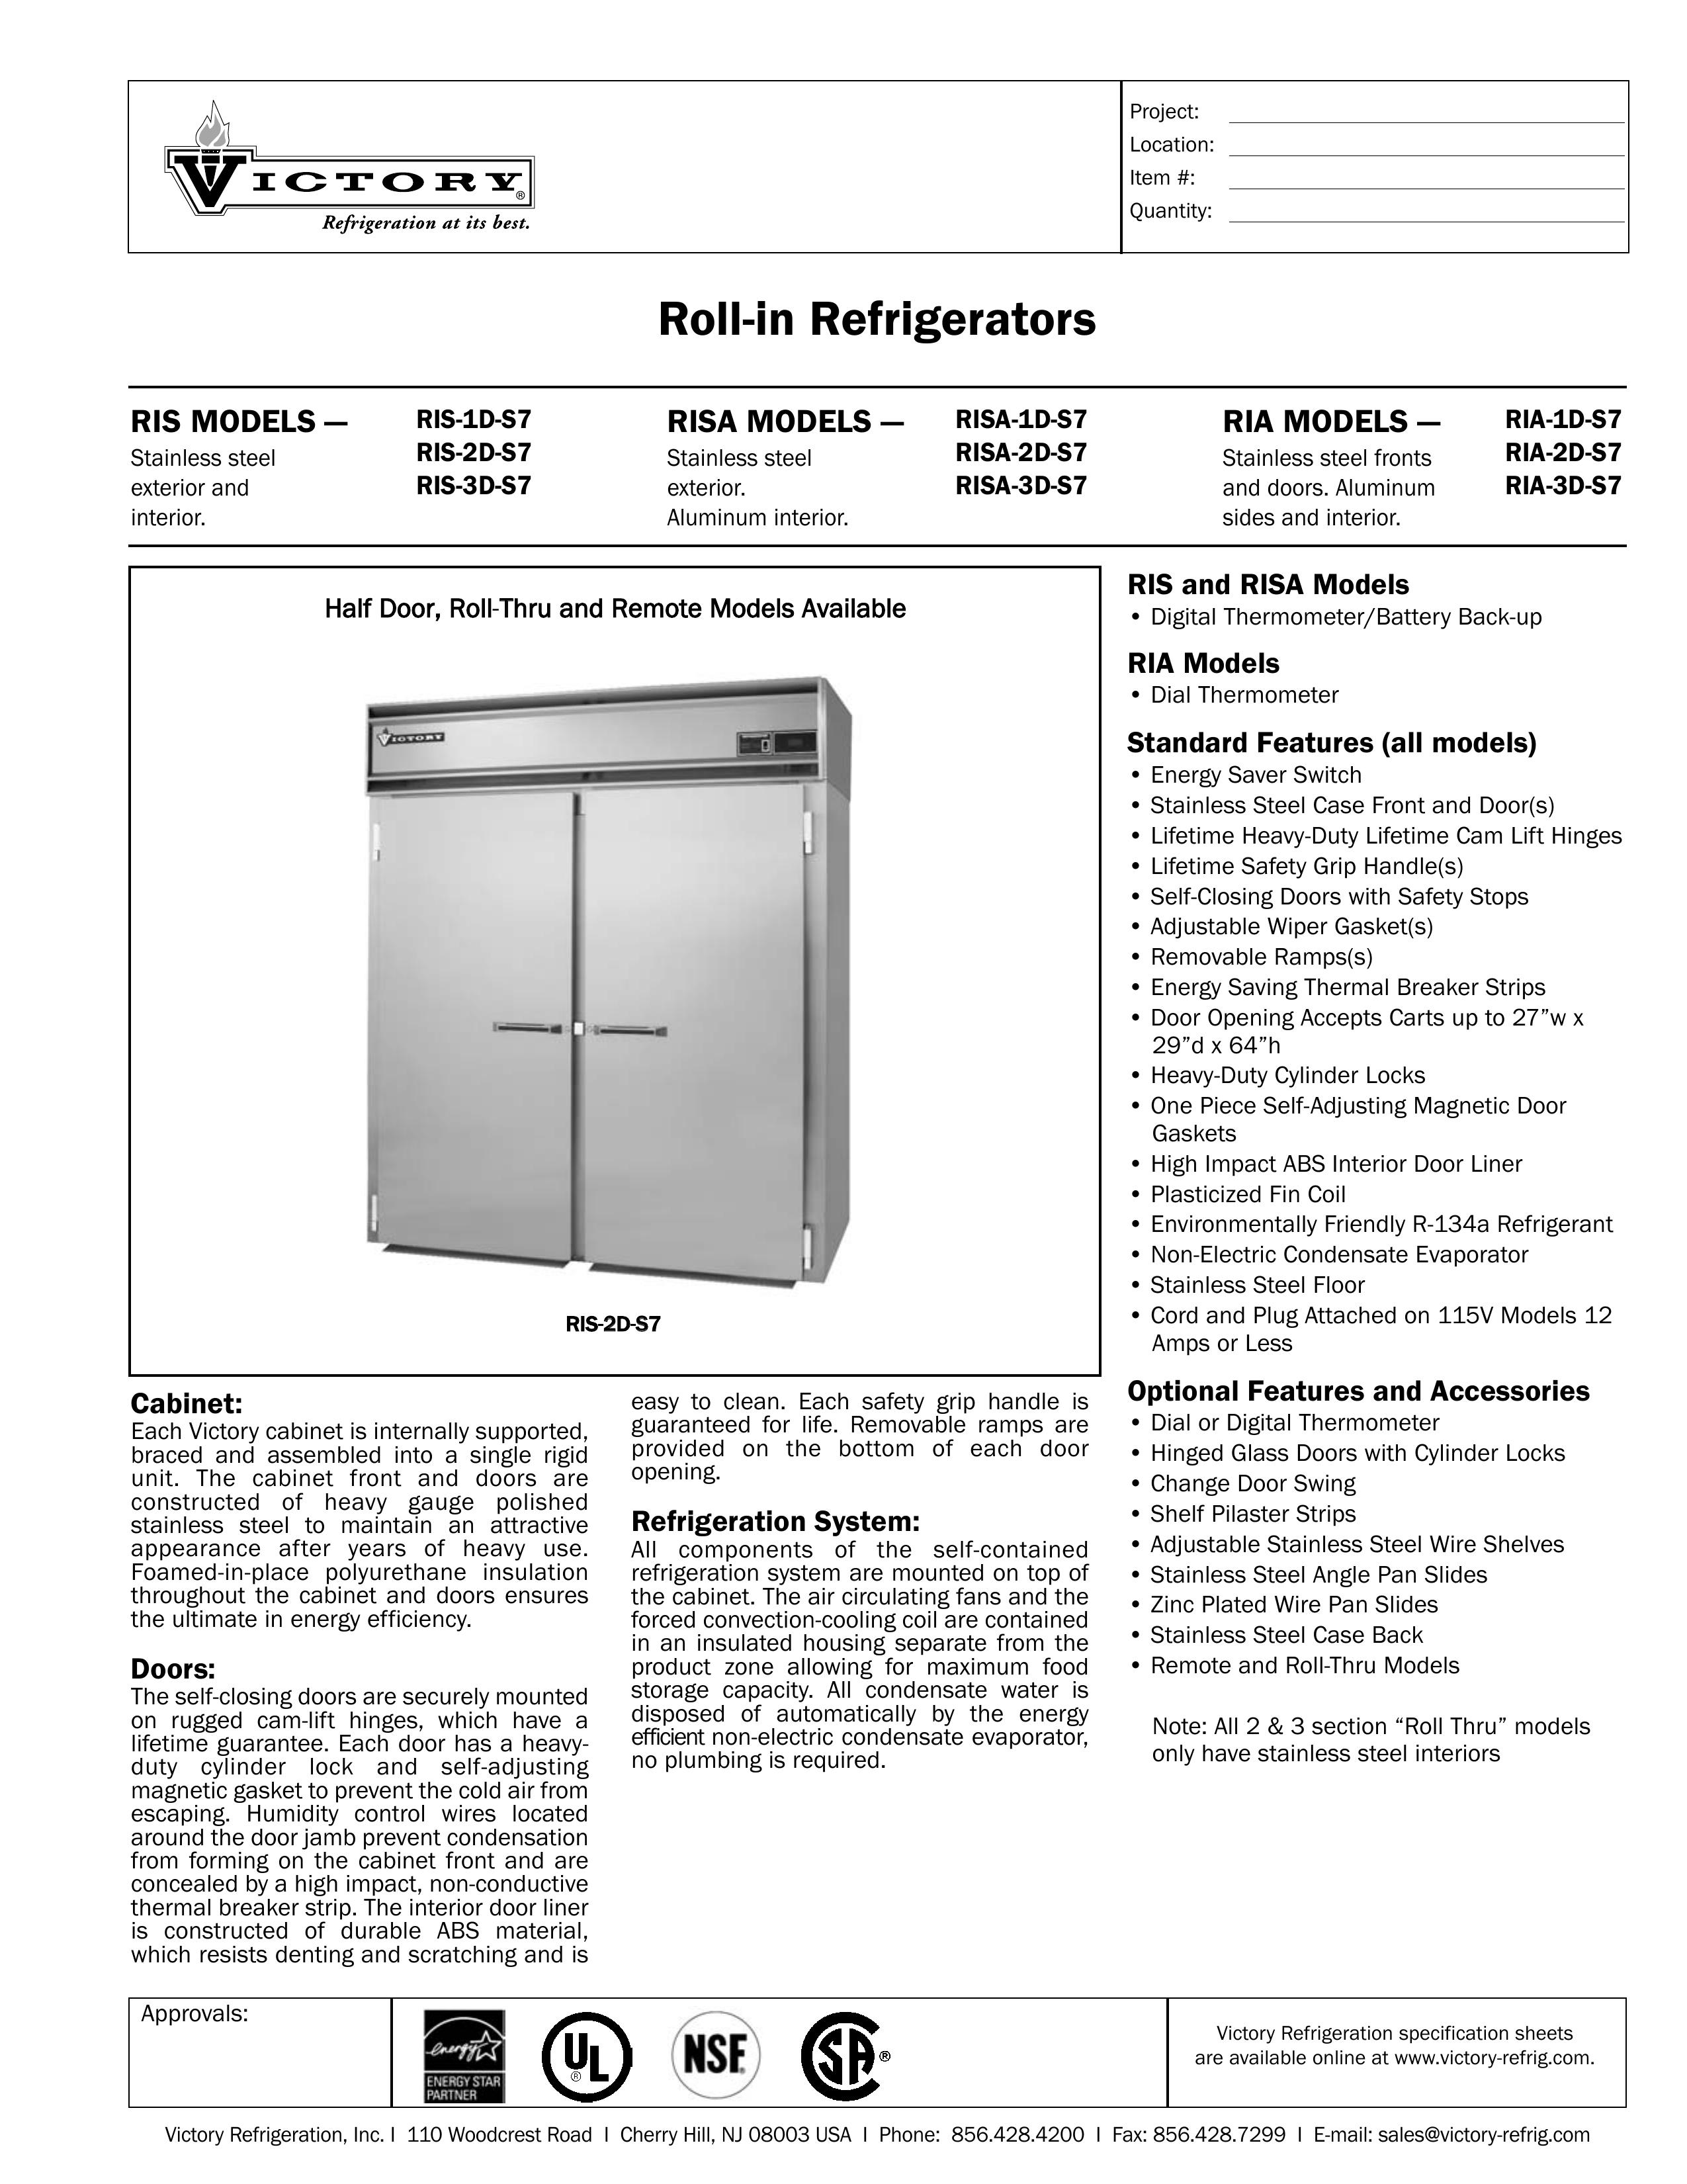 Victory Refrigeration RIA-3D-S7 Refrigerator User Manual